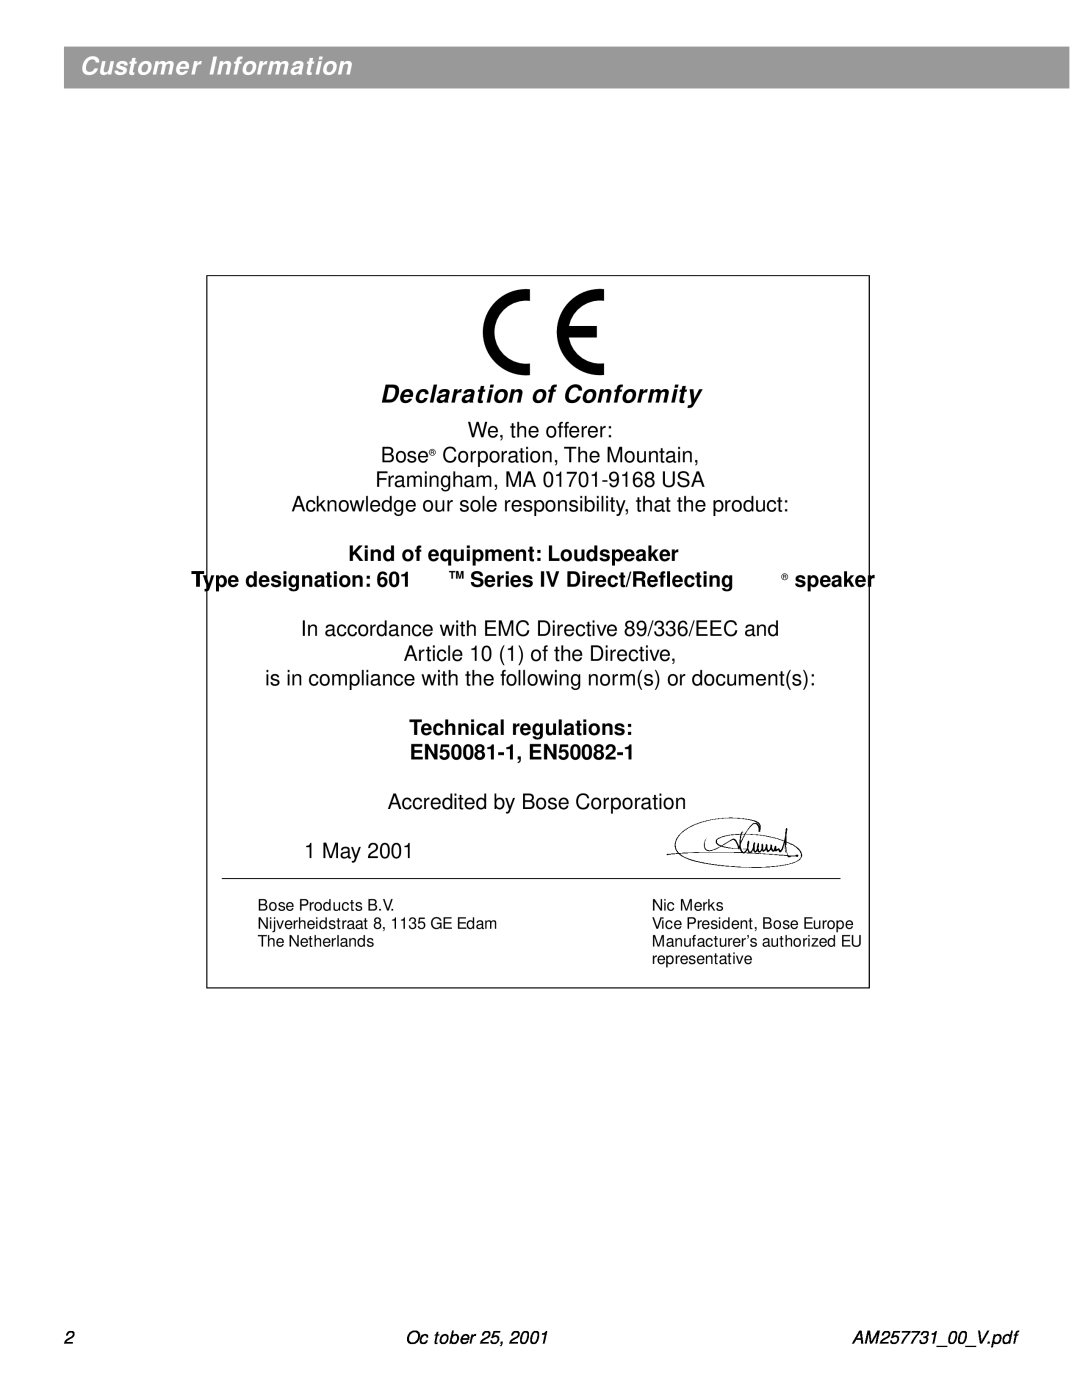 Bose 601TM manual Customer Information, Declaration of Conformity, Kind of equipment Loudspeaker, Type designation 